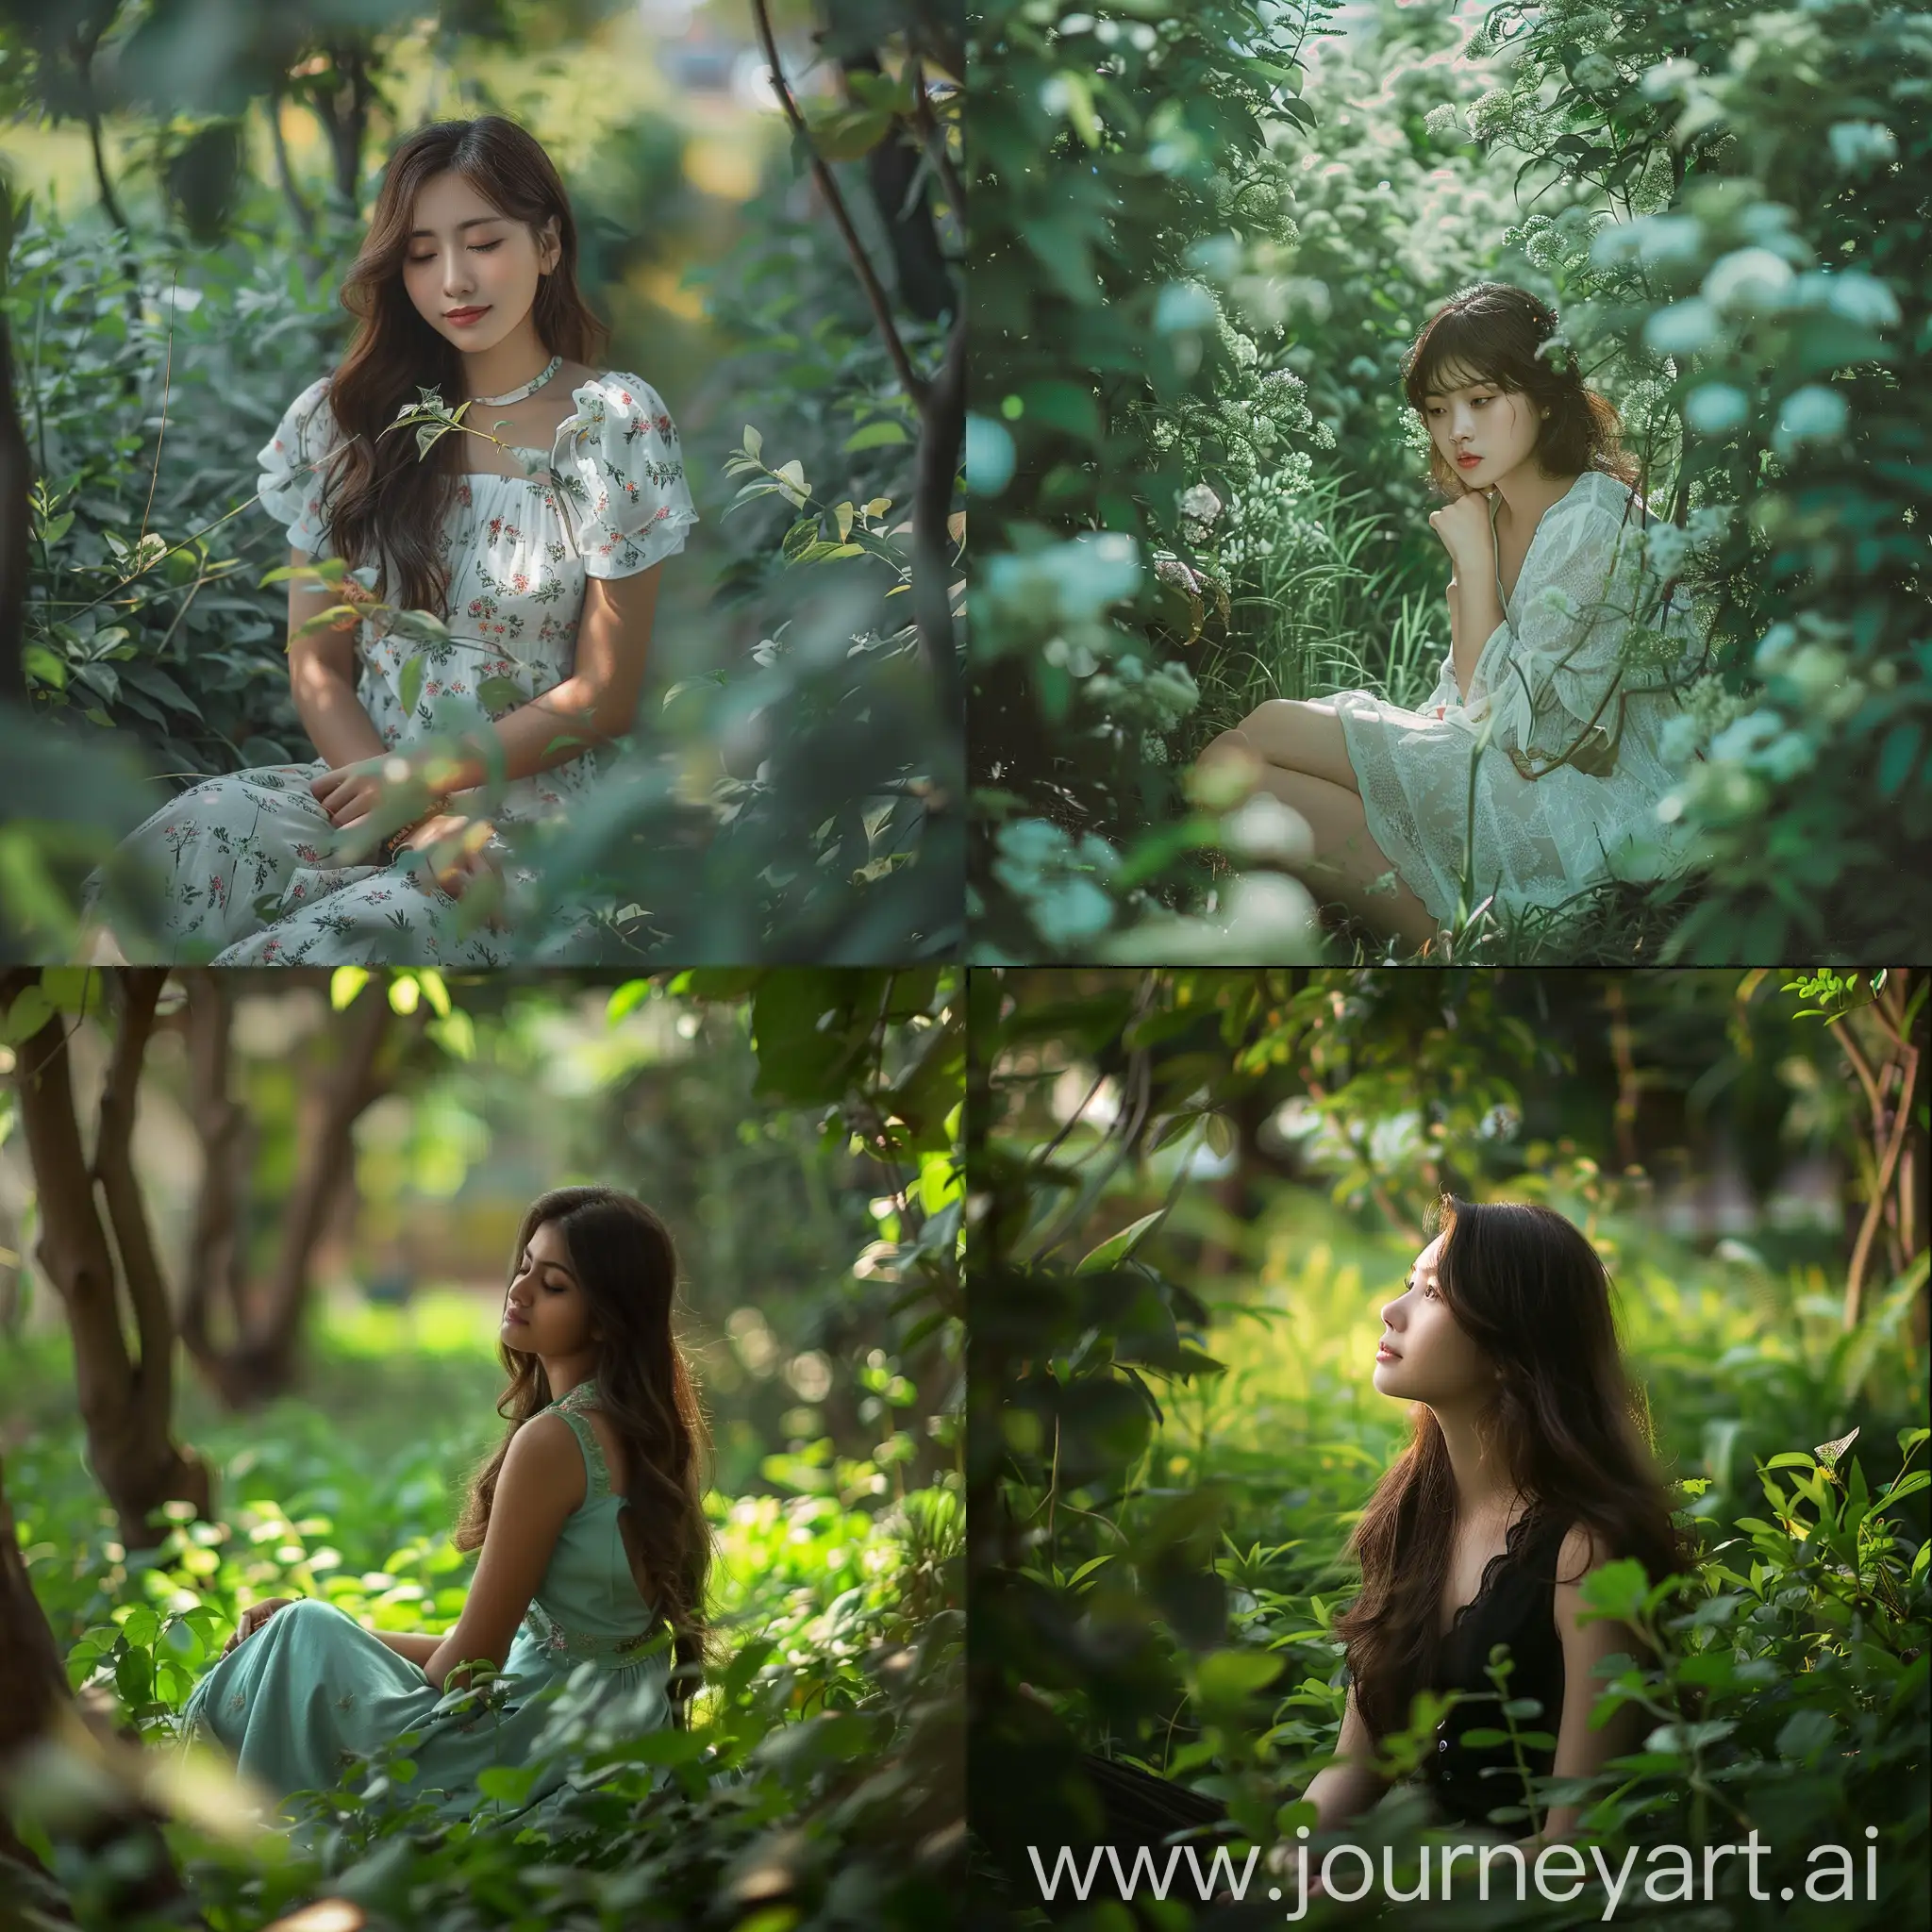 A beautiful girl is sitting in a green garden